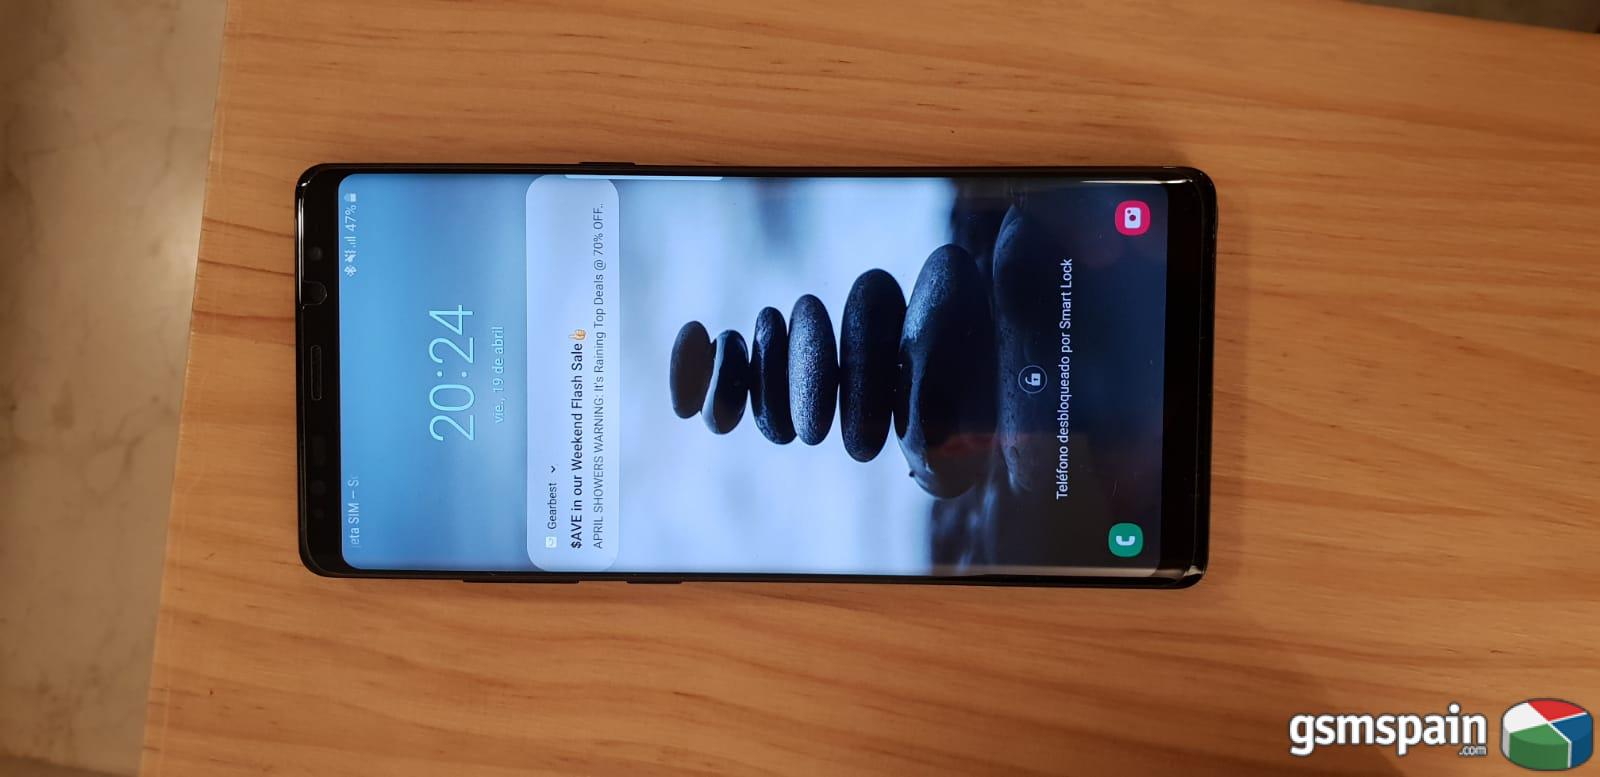 [VENDO] Samsung Note 8 Duos 64gb Negro